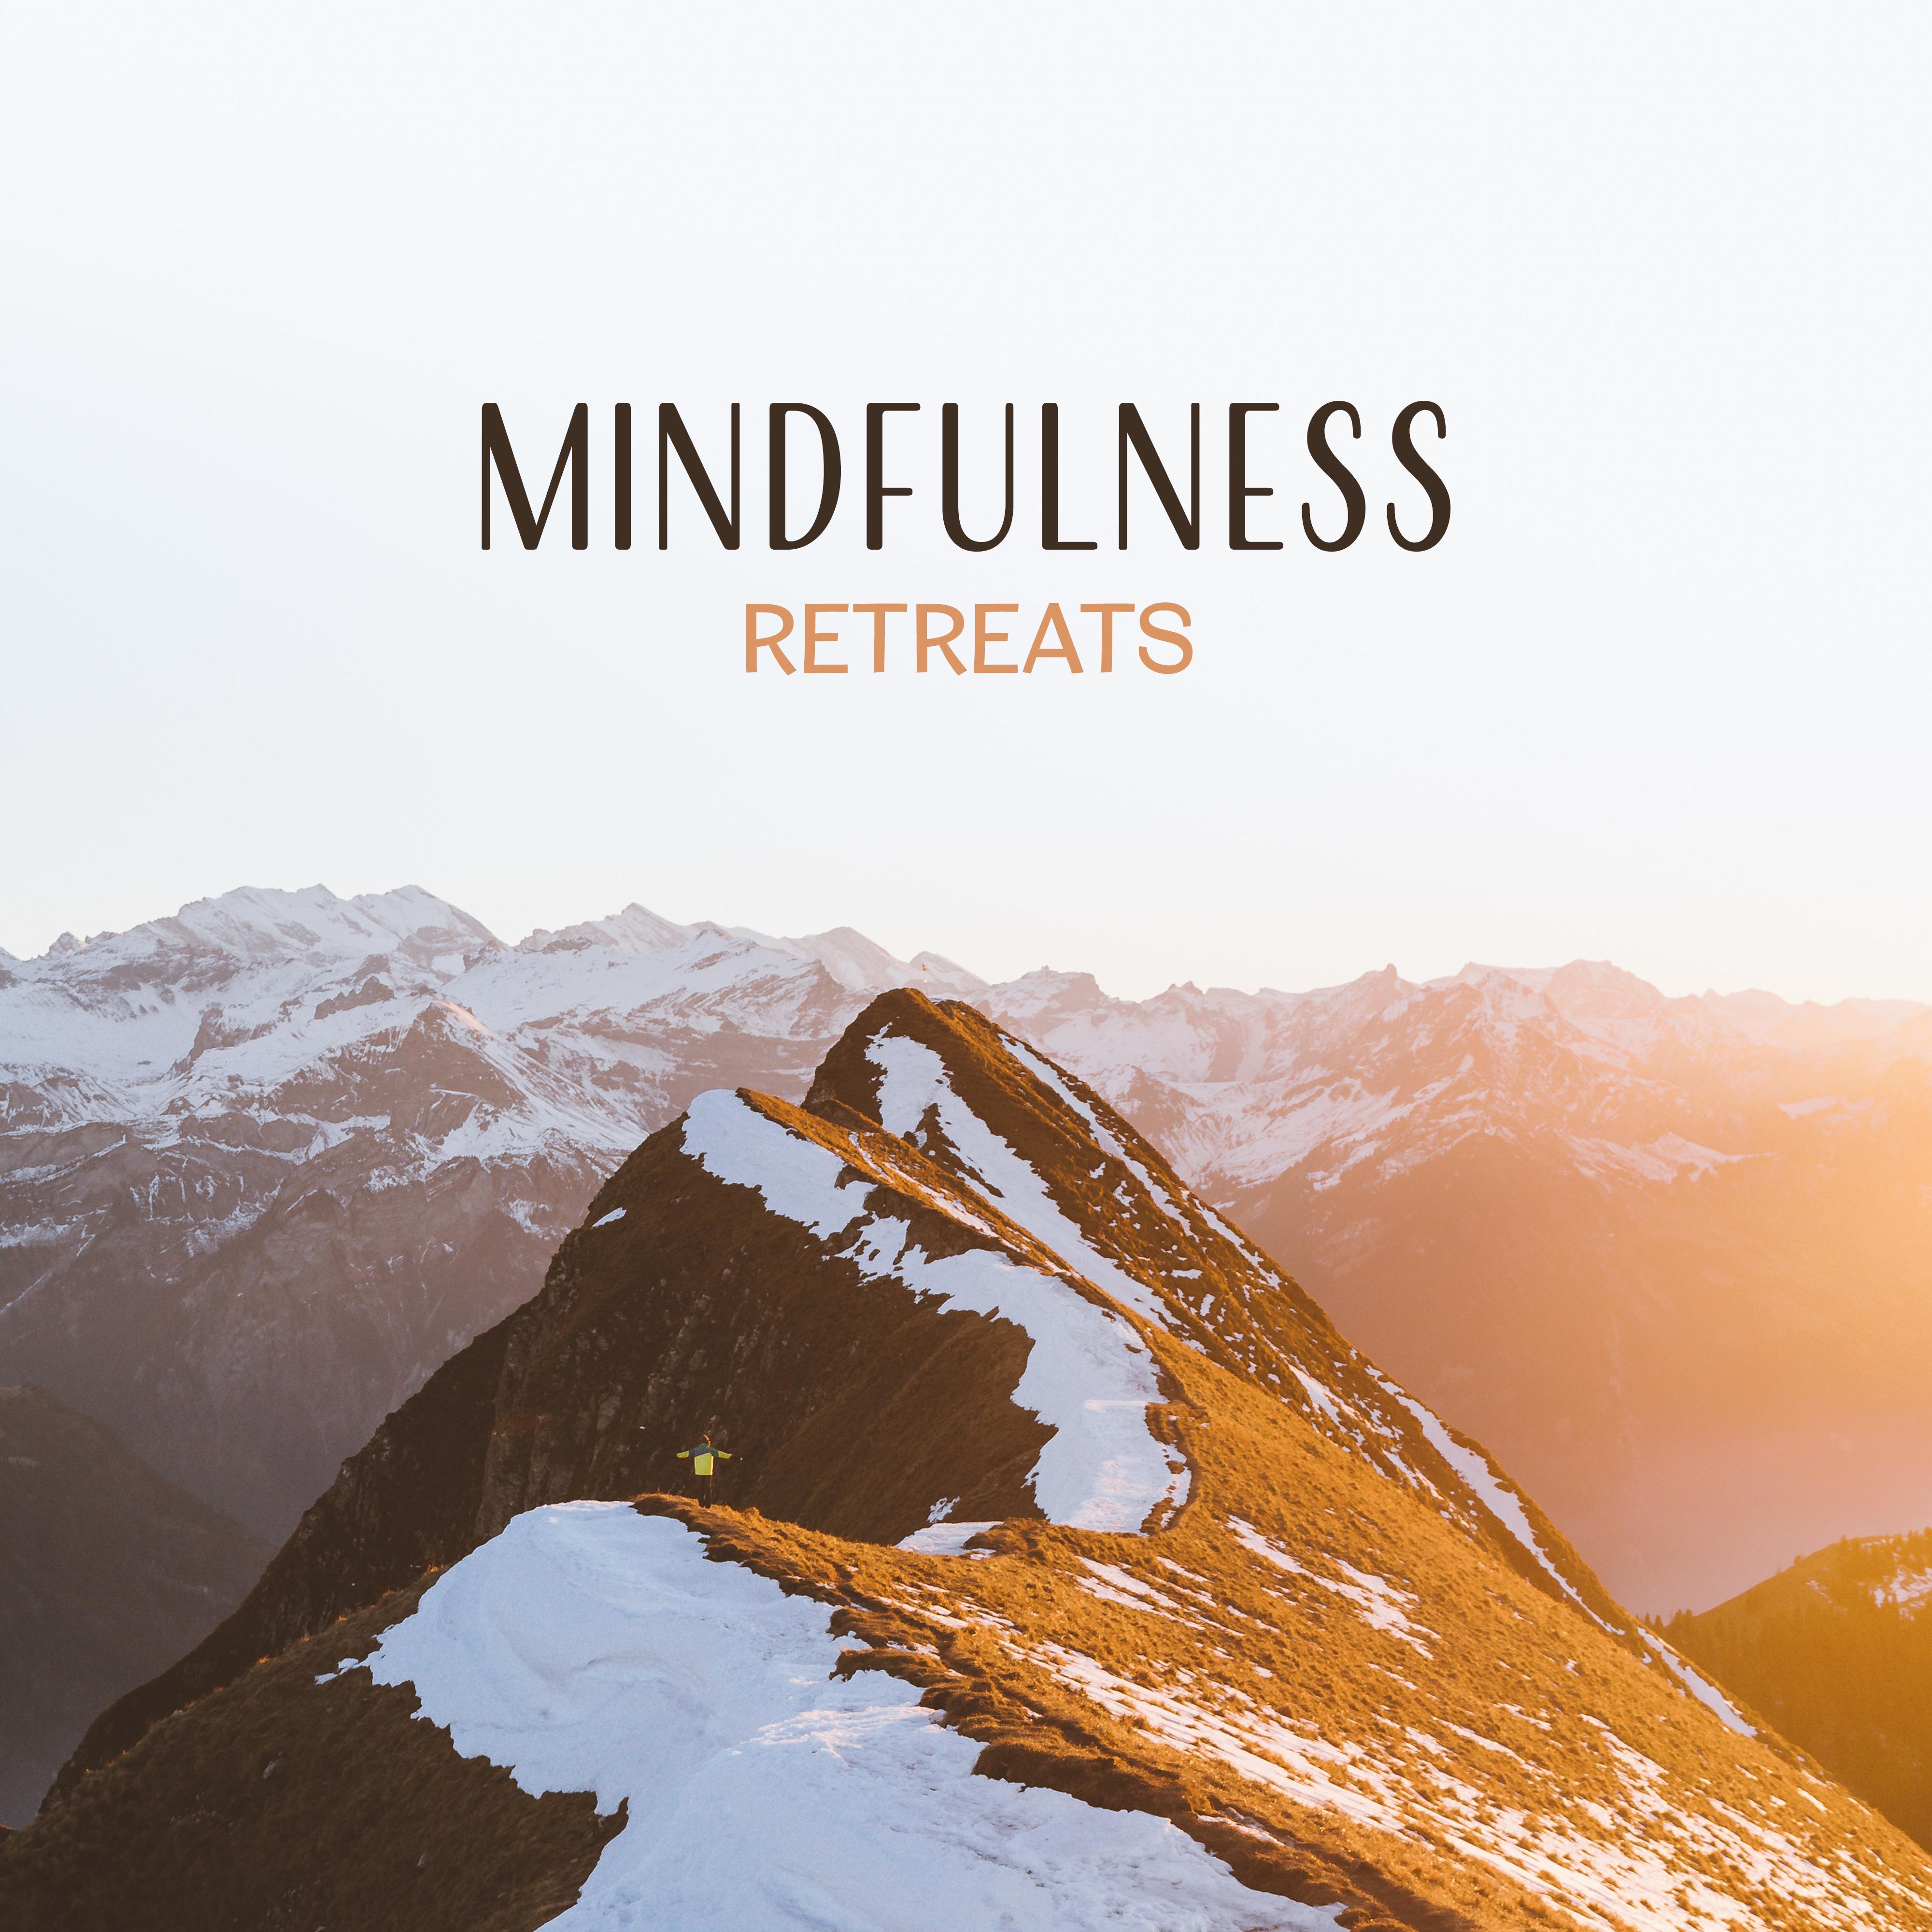 Mindfulness Retreats  New Age Sounds for Meditation, Be Mindful, Yoga Music, Zen Power, Healing Reiki